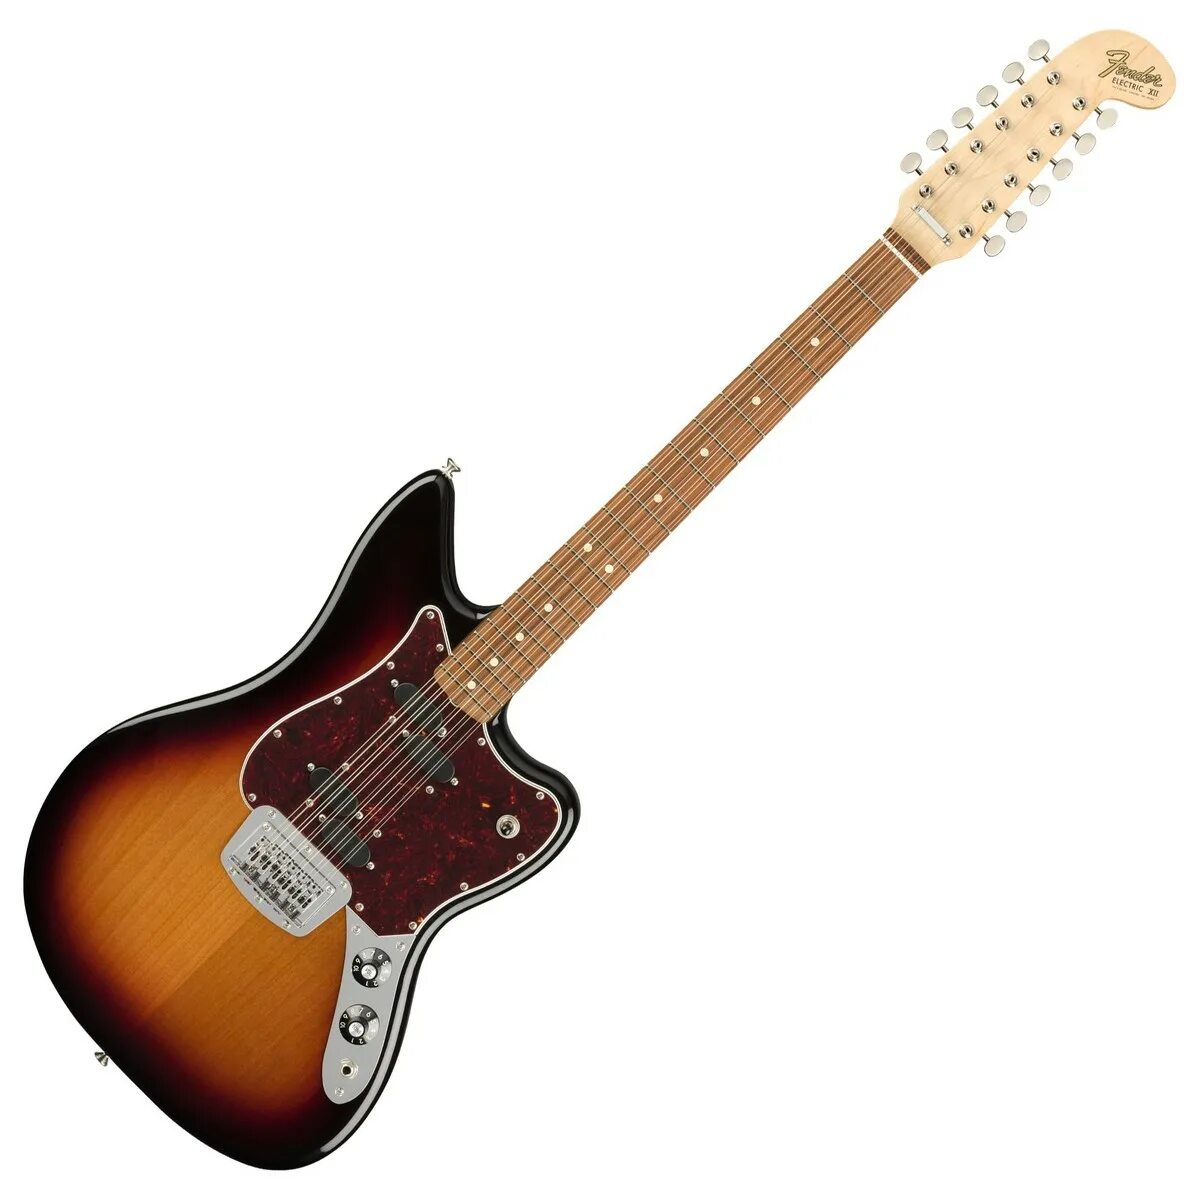 Электрогитара Fender Electric XII PF 3tsb. Fender Alternate reality Electric XII. Fender 12 String Electric. 12 Струнная гитара Фендер.